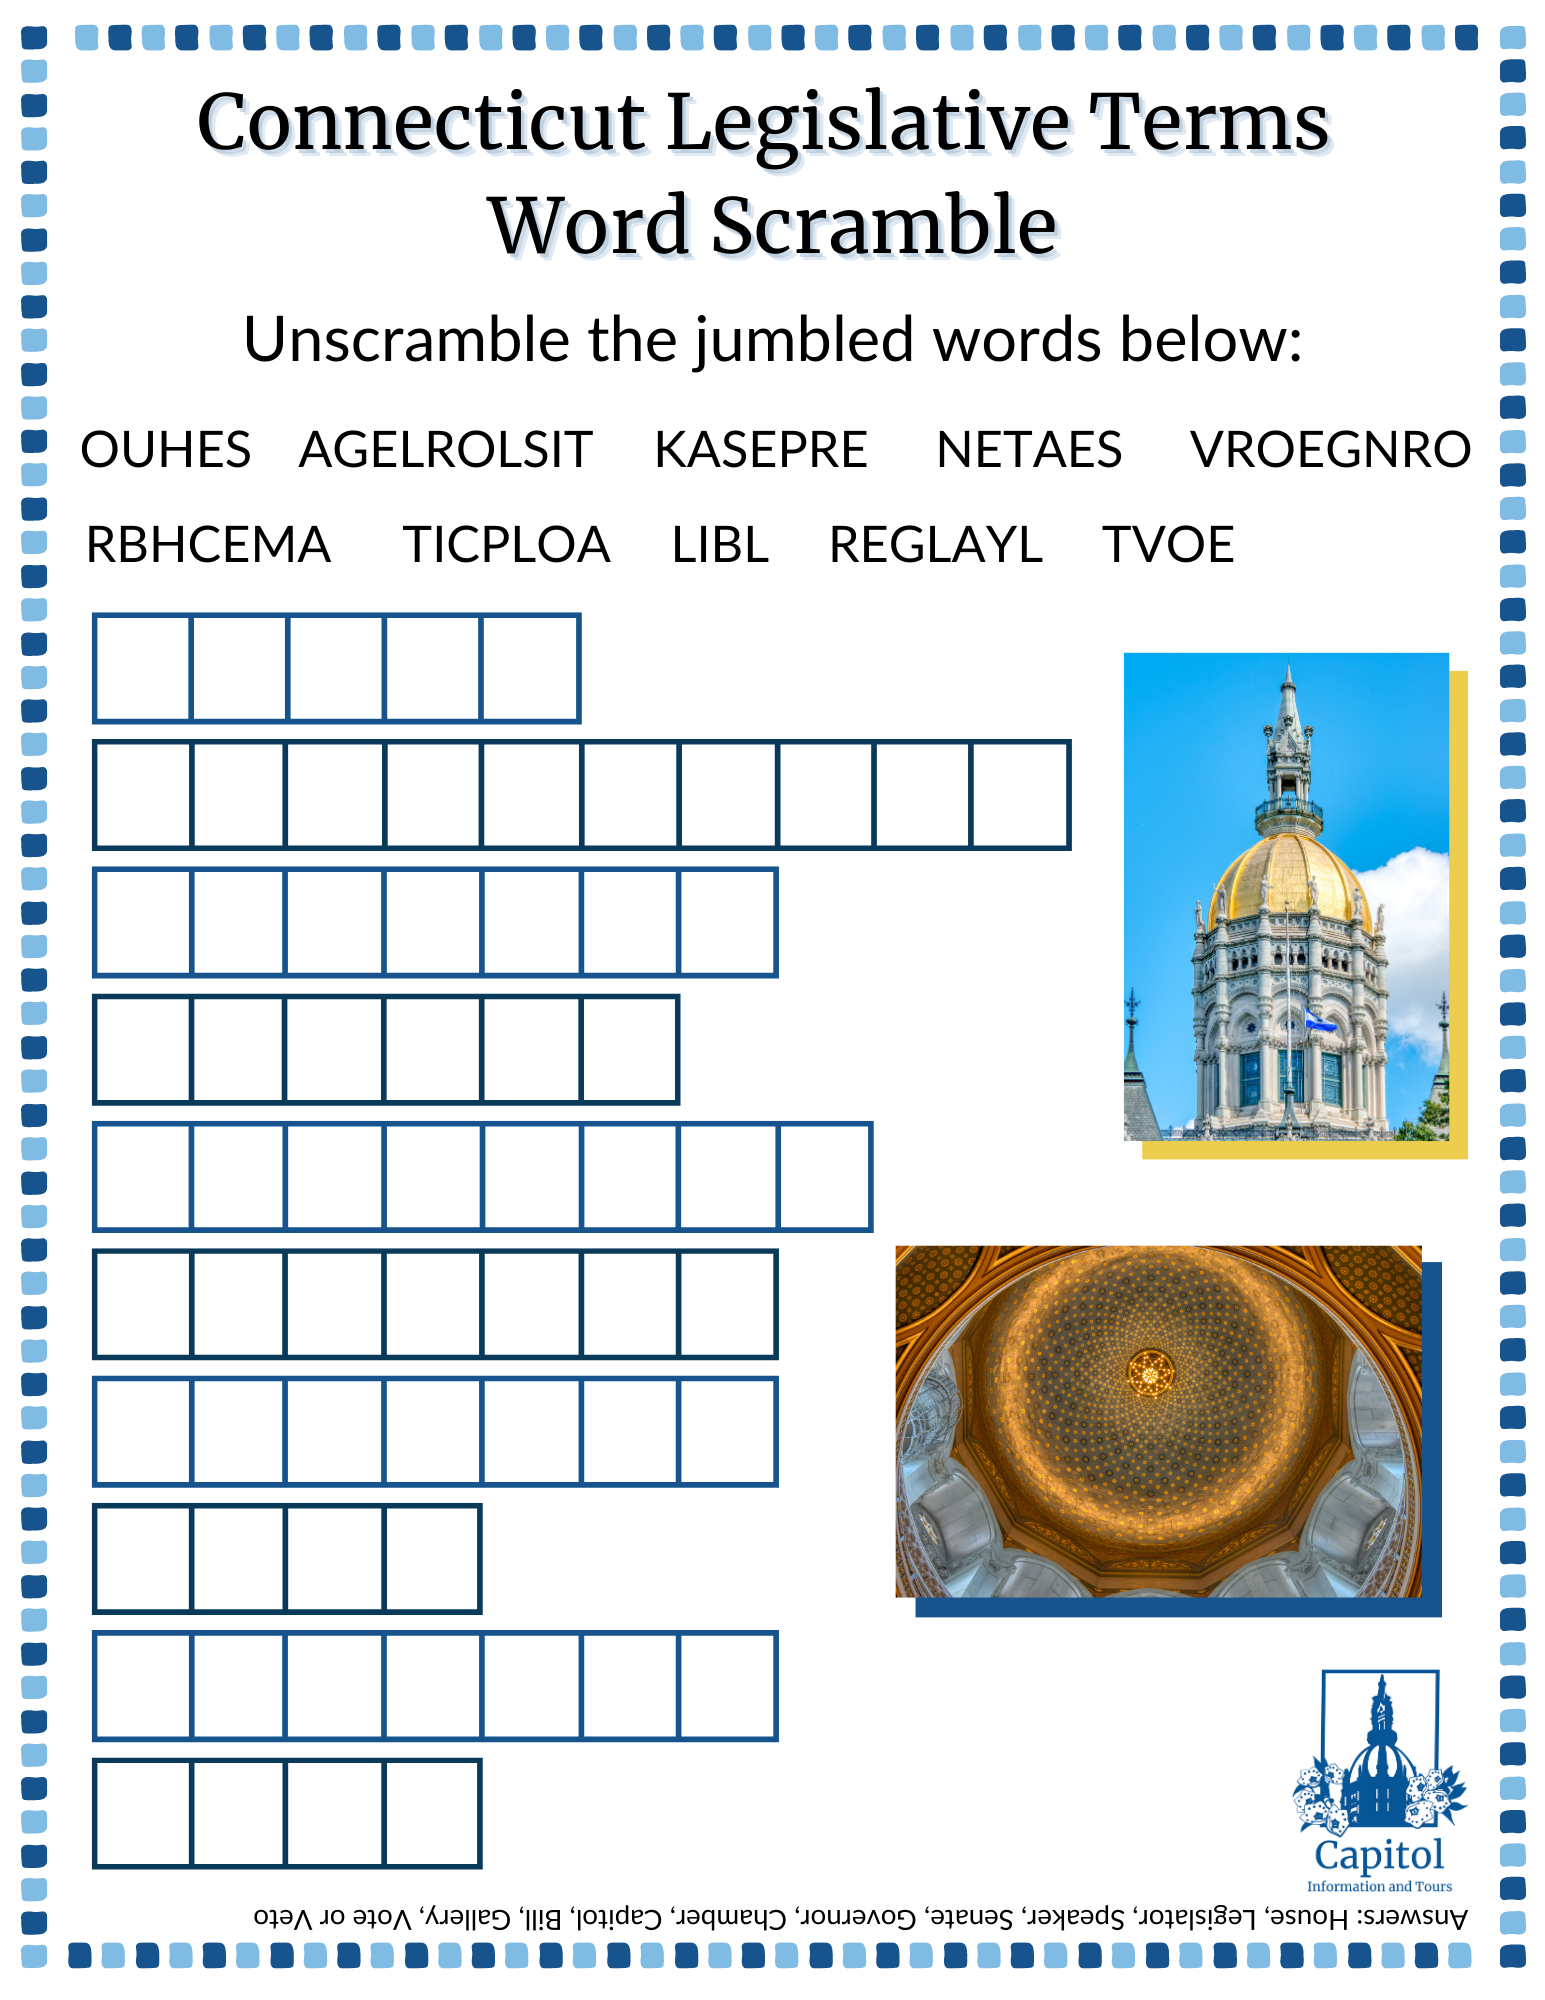 preview of the legislative terms word scramble